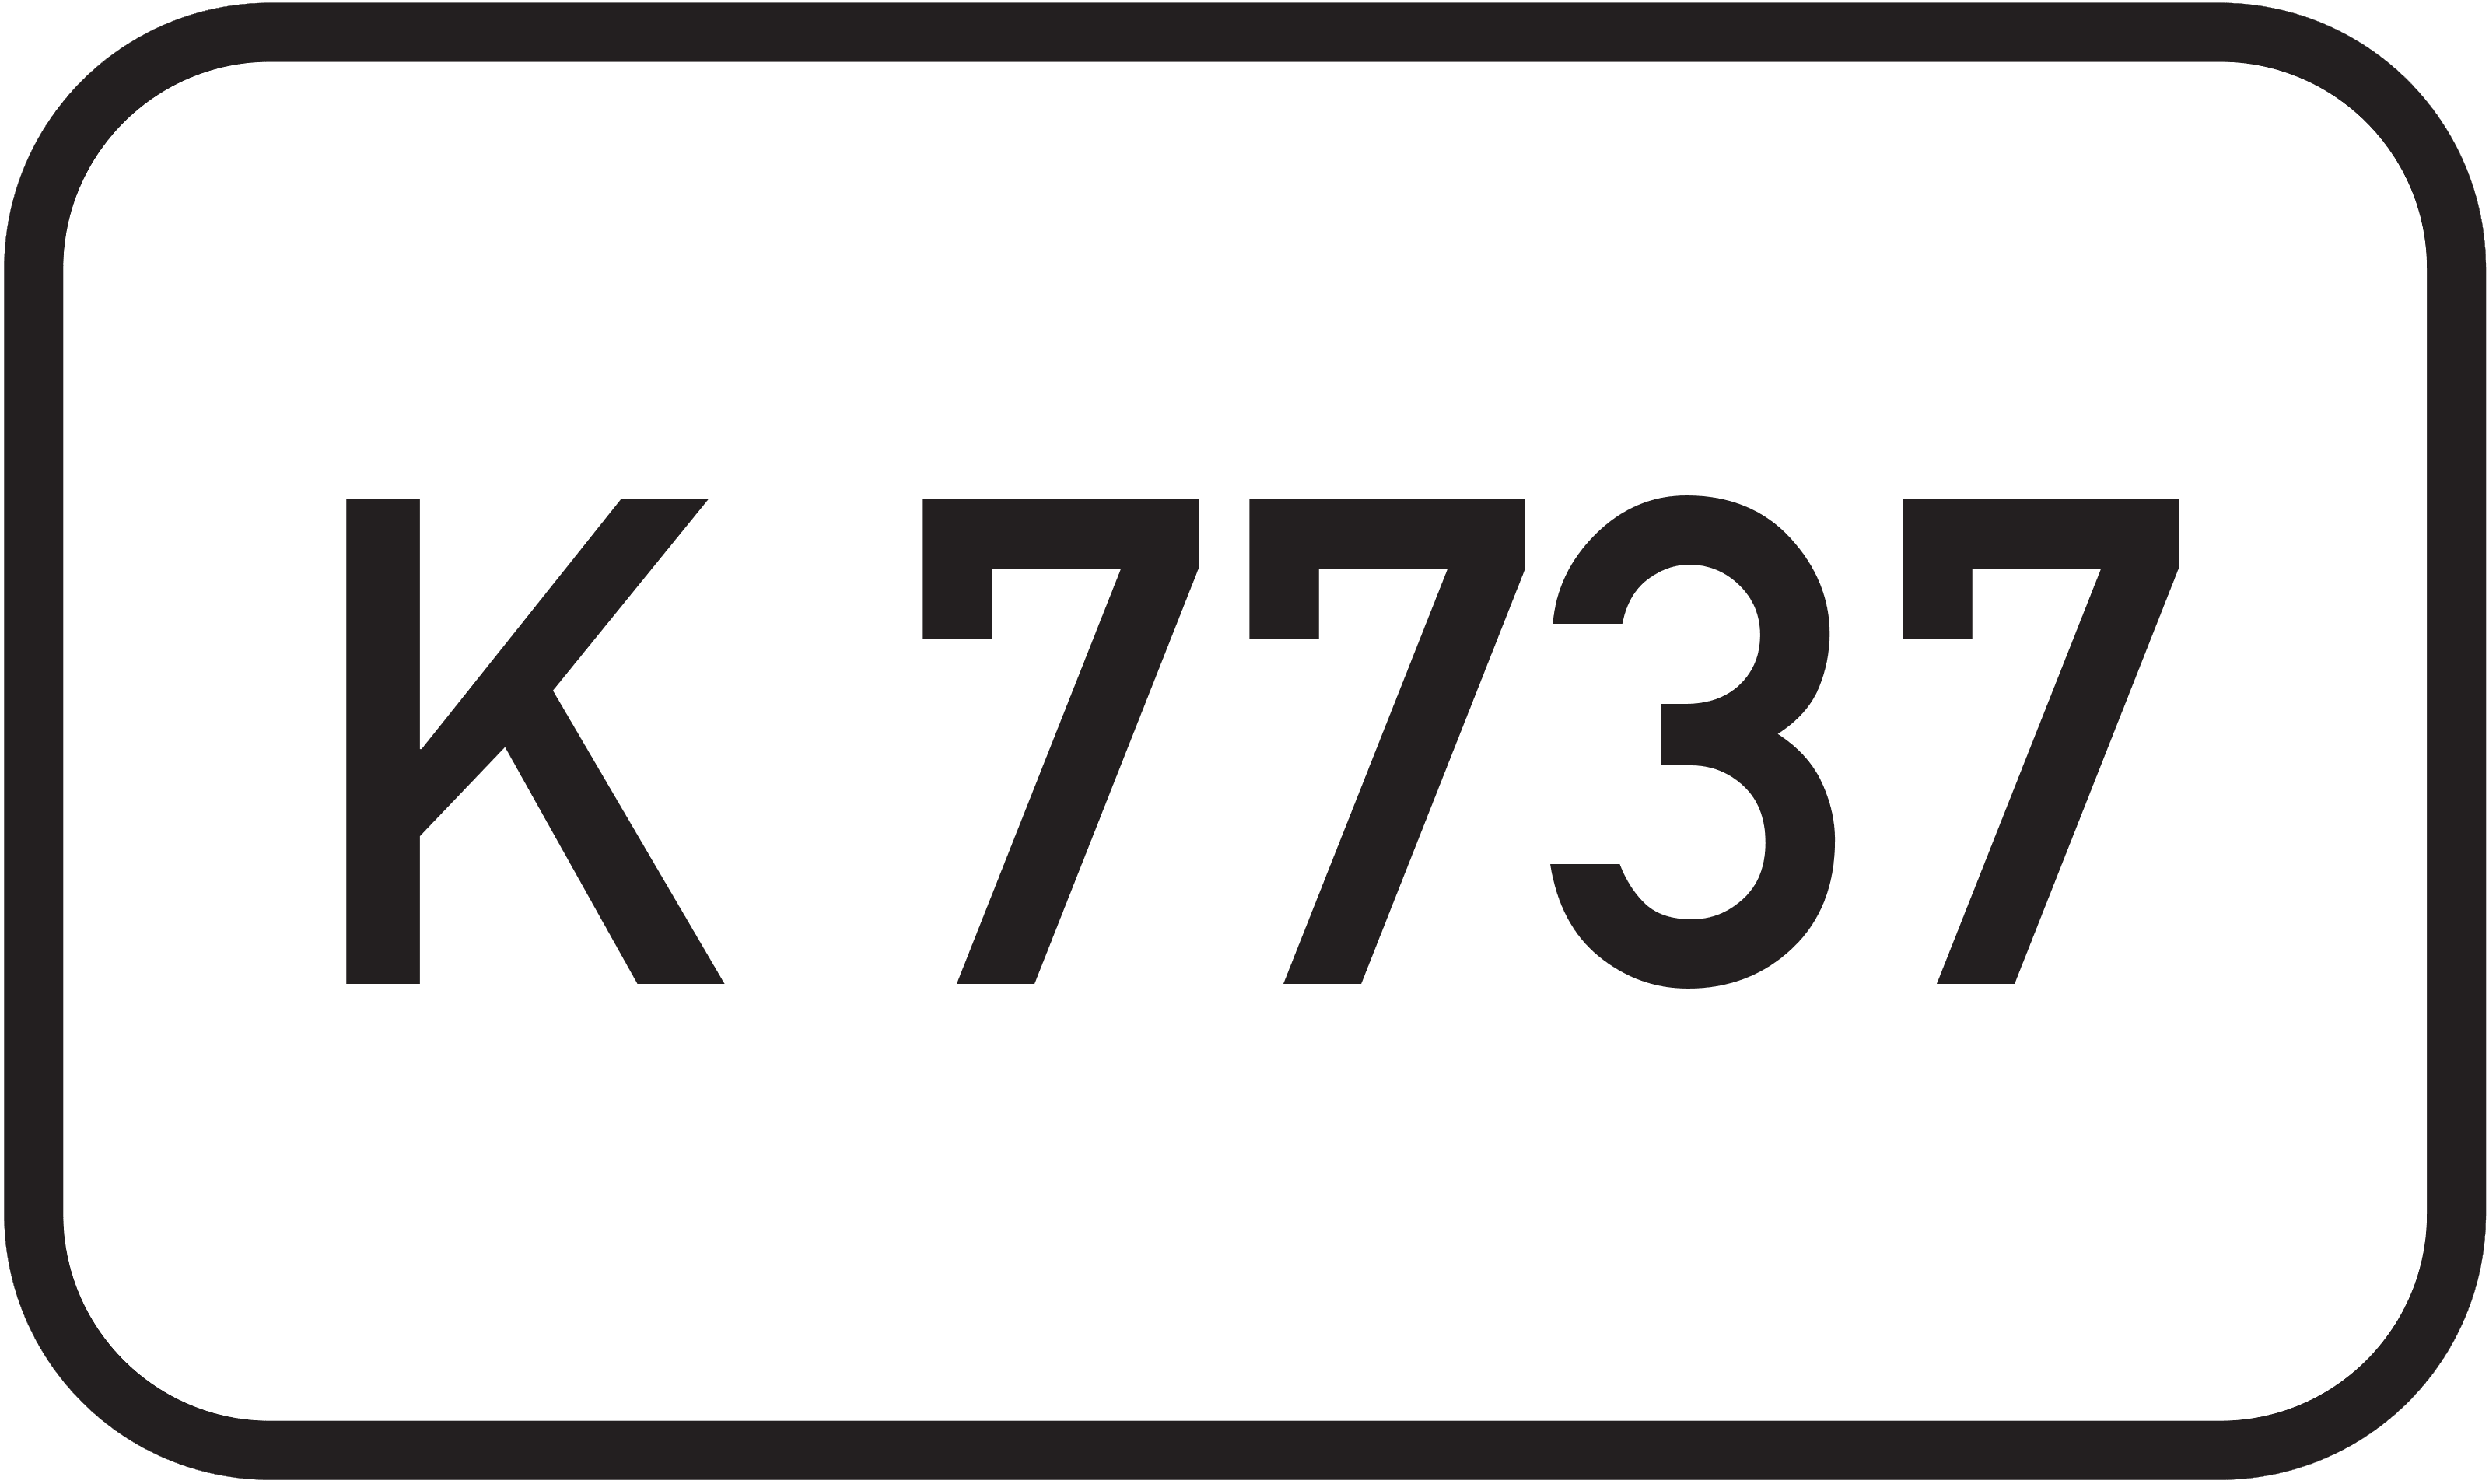 Straßenschild Kreisstraße K 7737